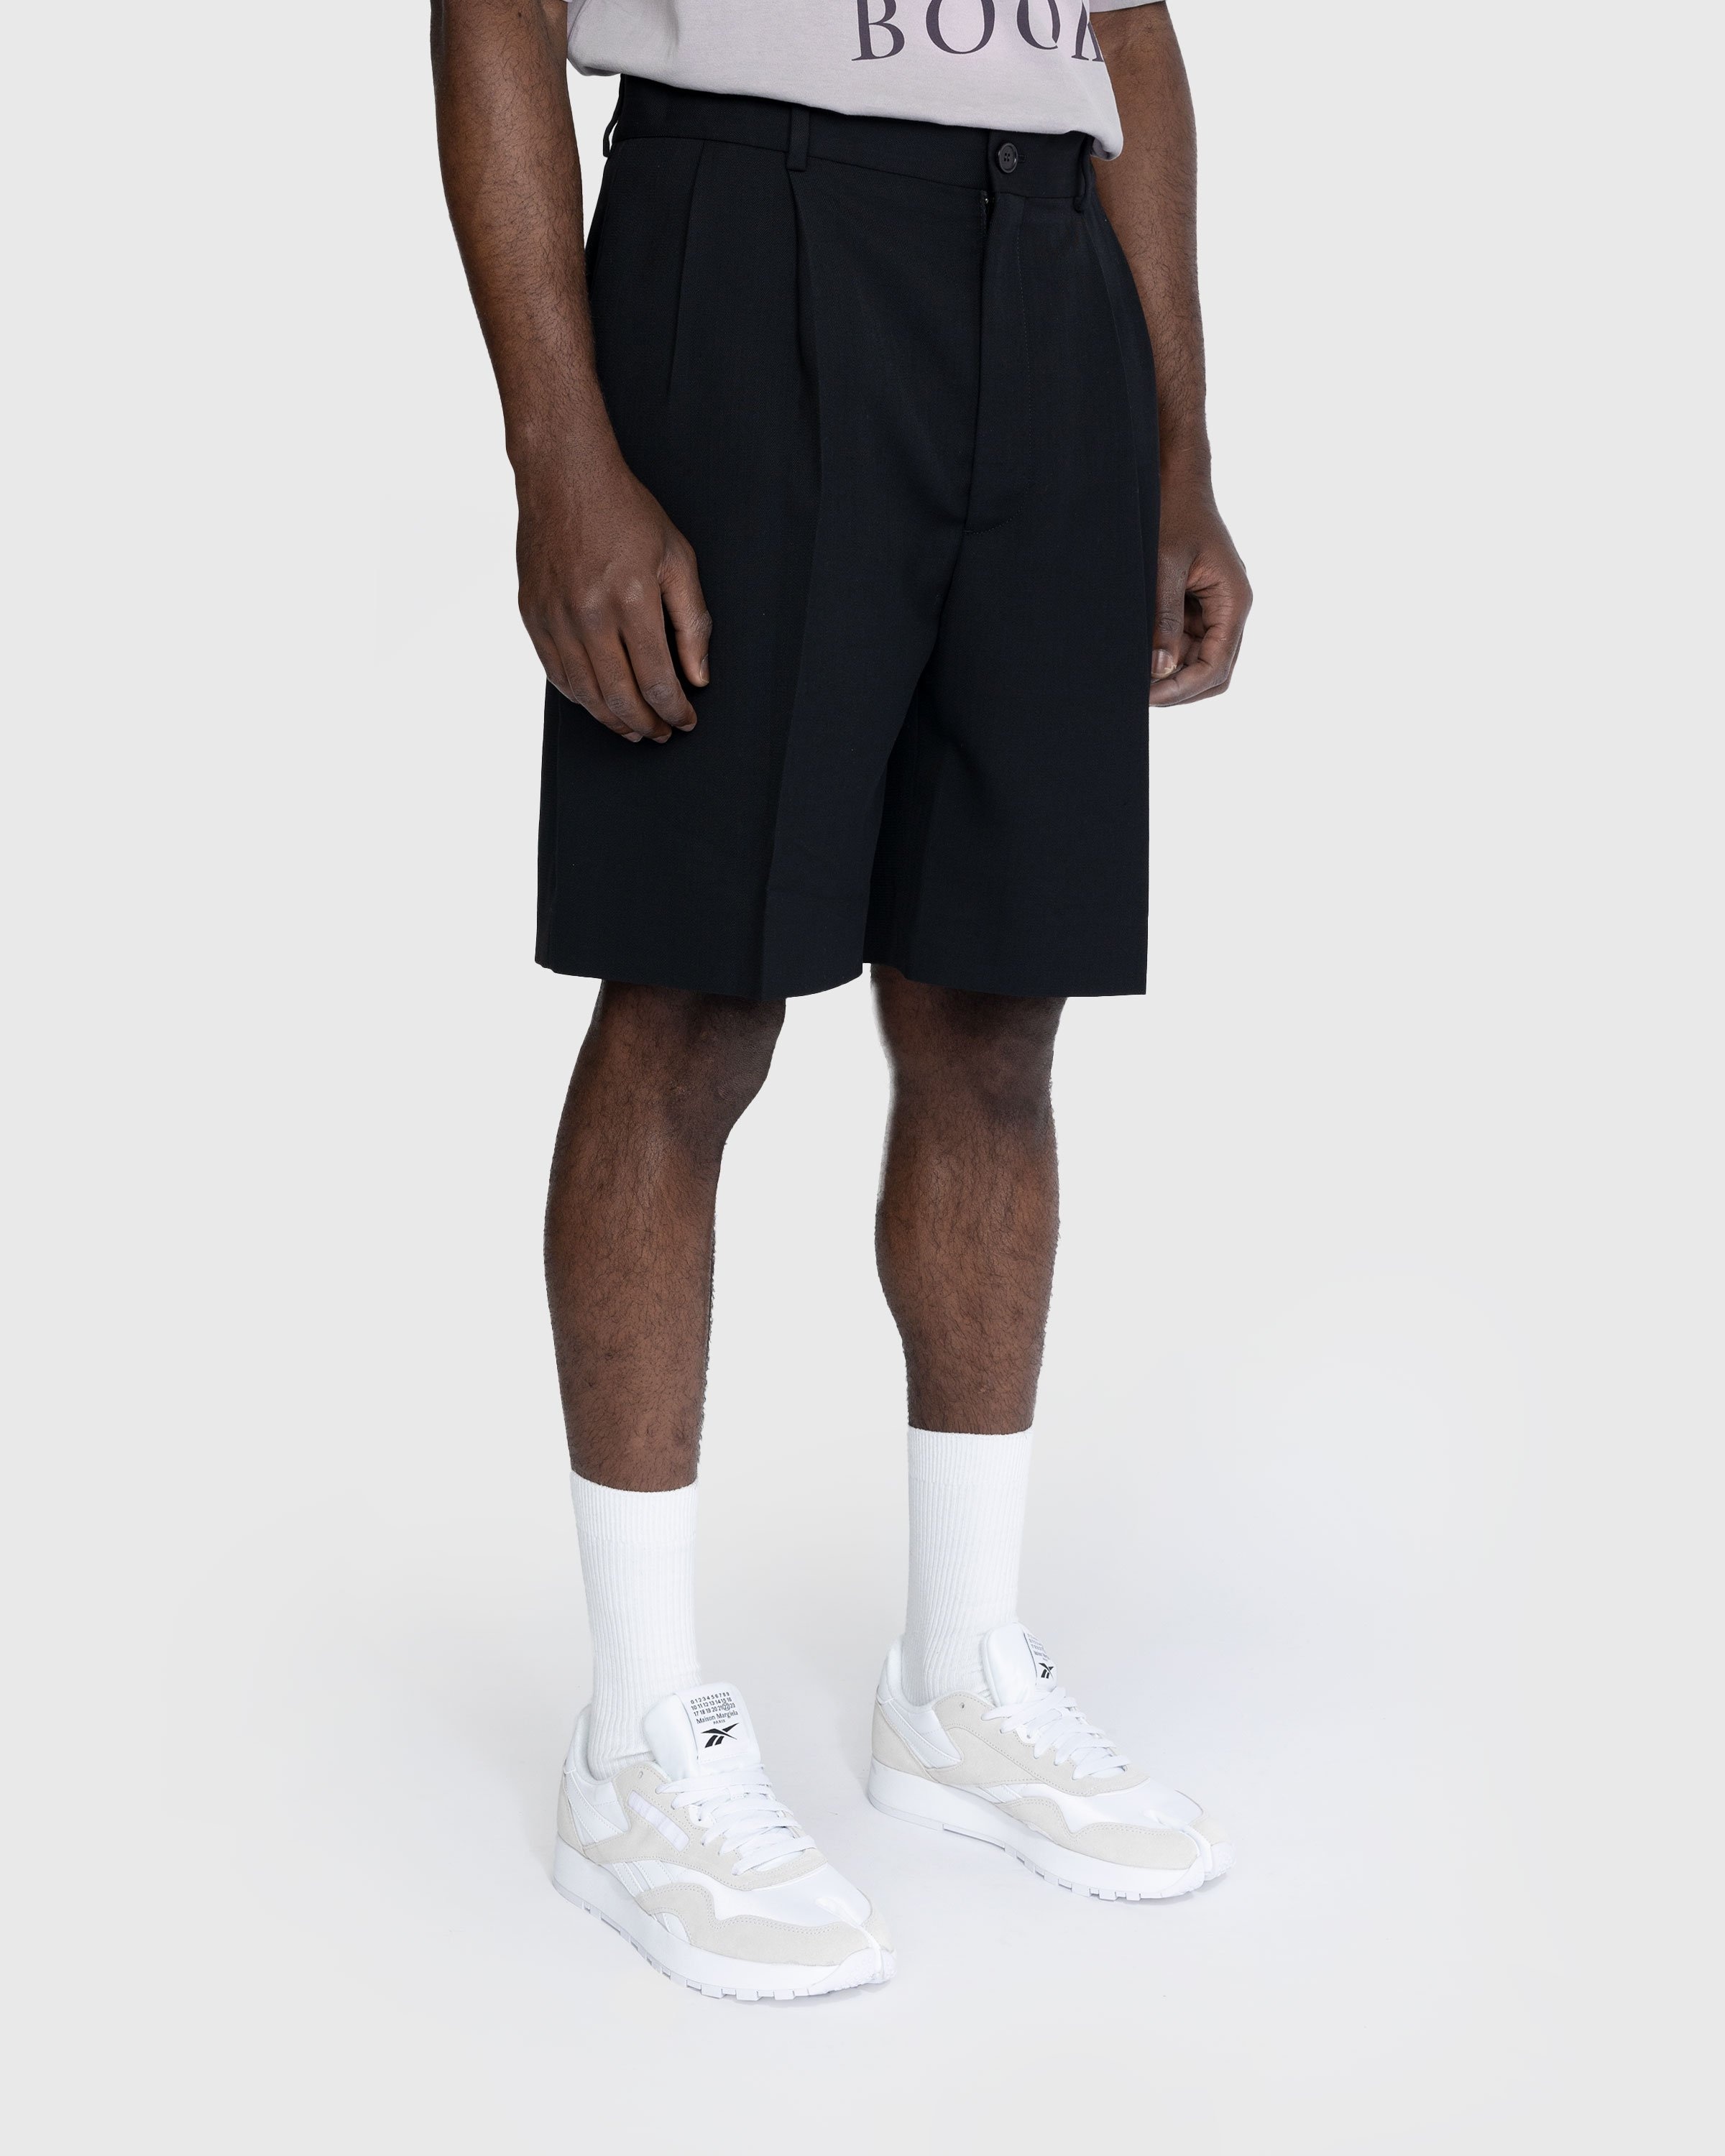 Acne Studios – Tailored Pleated Shorts Black - Bermuda Cuts - Black - Image 4